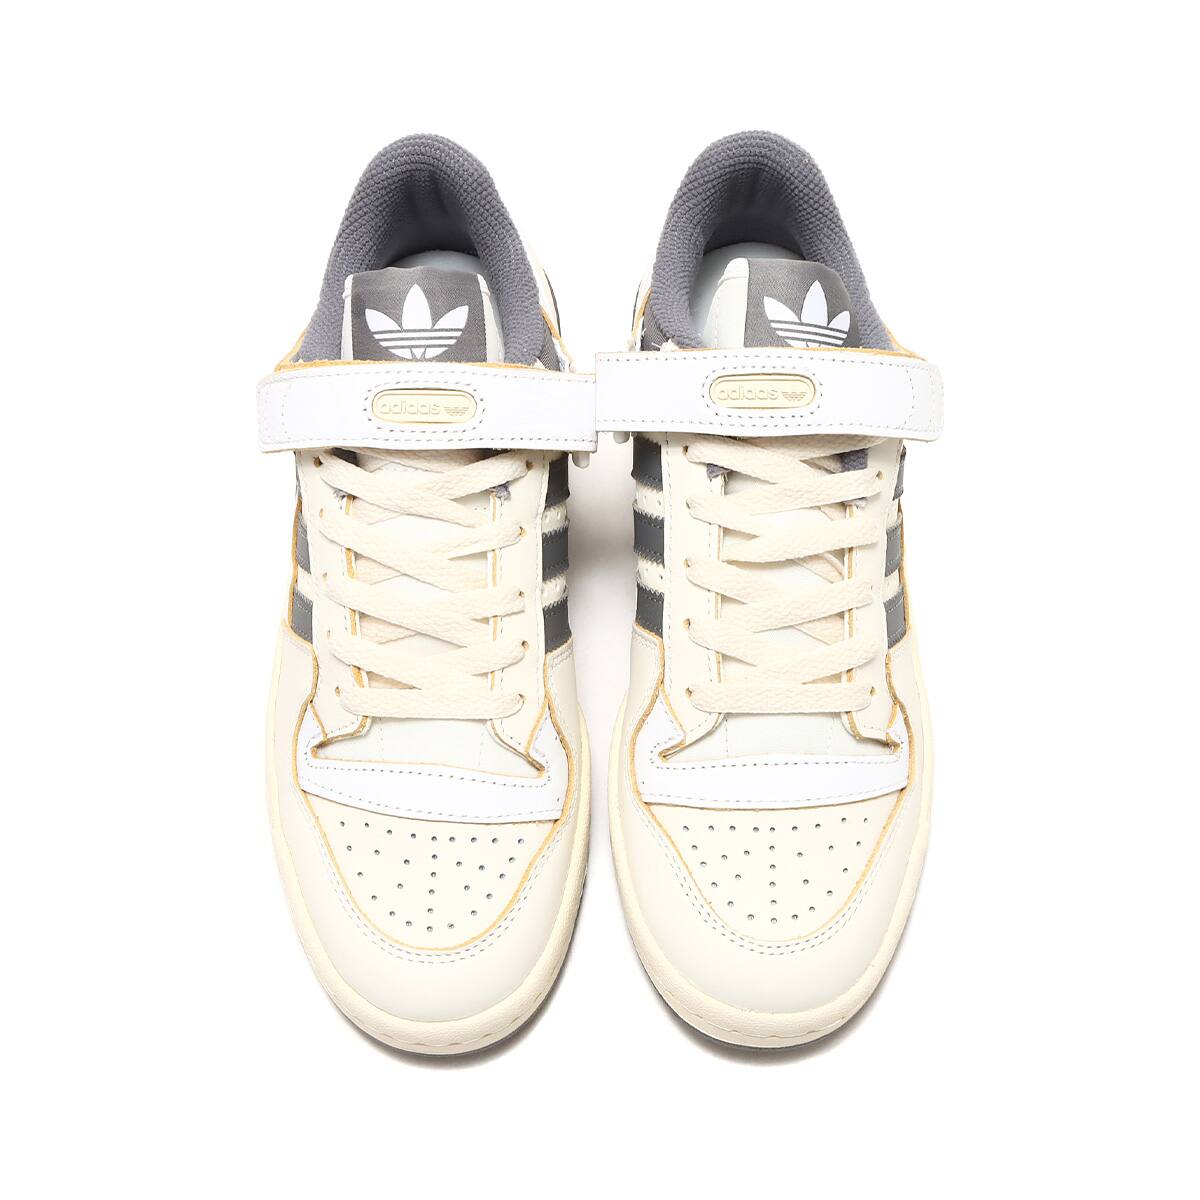 Adidas Forum 84 Low Off White / Grey Four / Footwear White - HQ4374